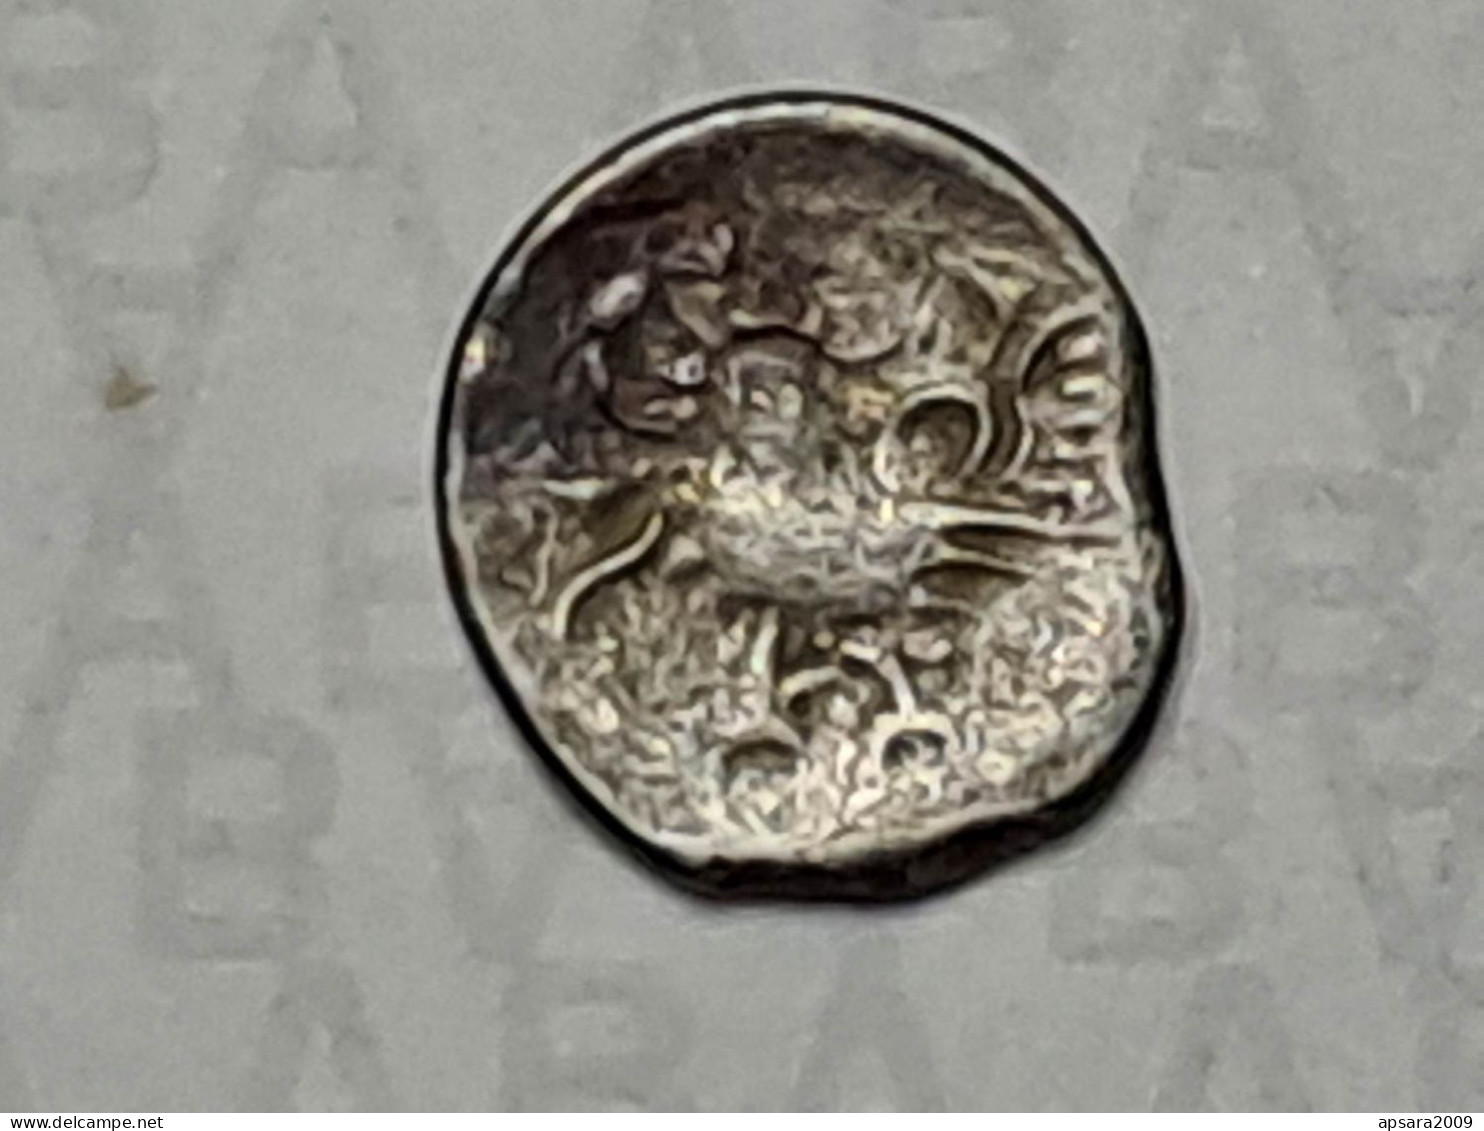 CAMBODGE / CAMBODIA/ Coin Silver Khmer Antique - Cambodja